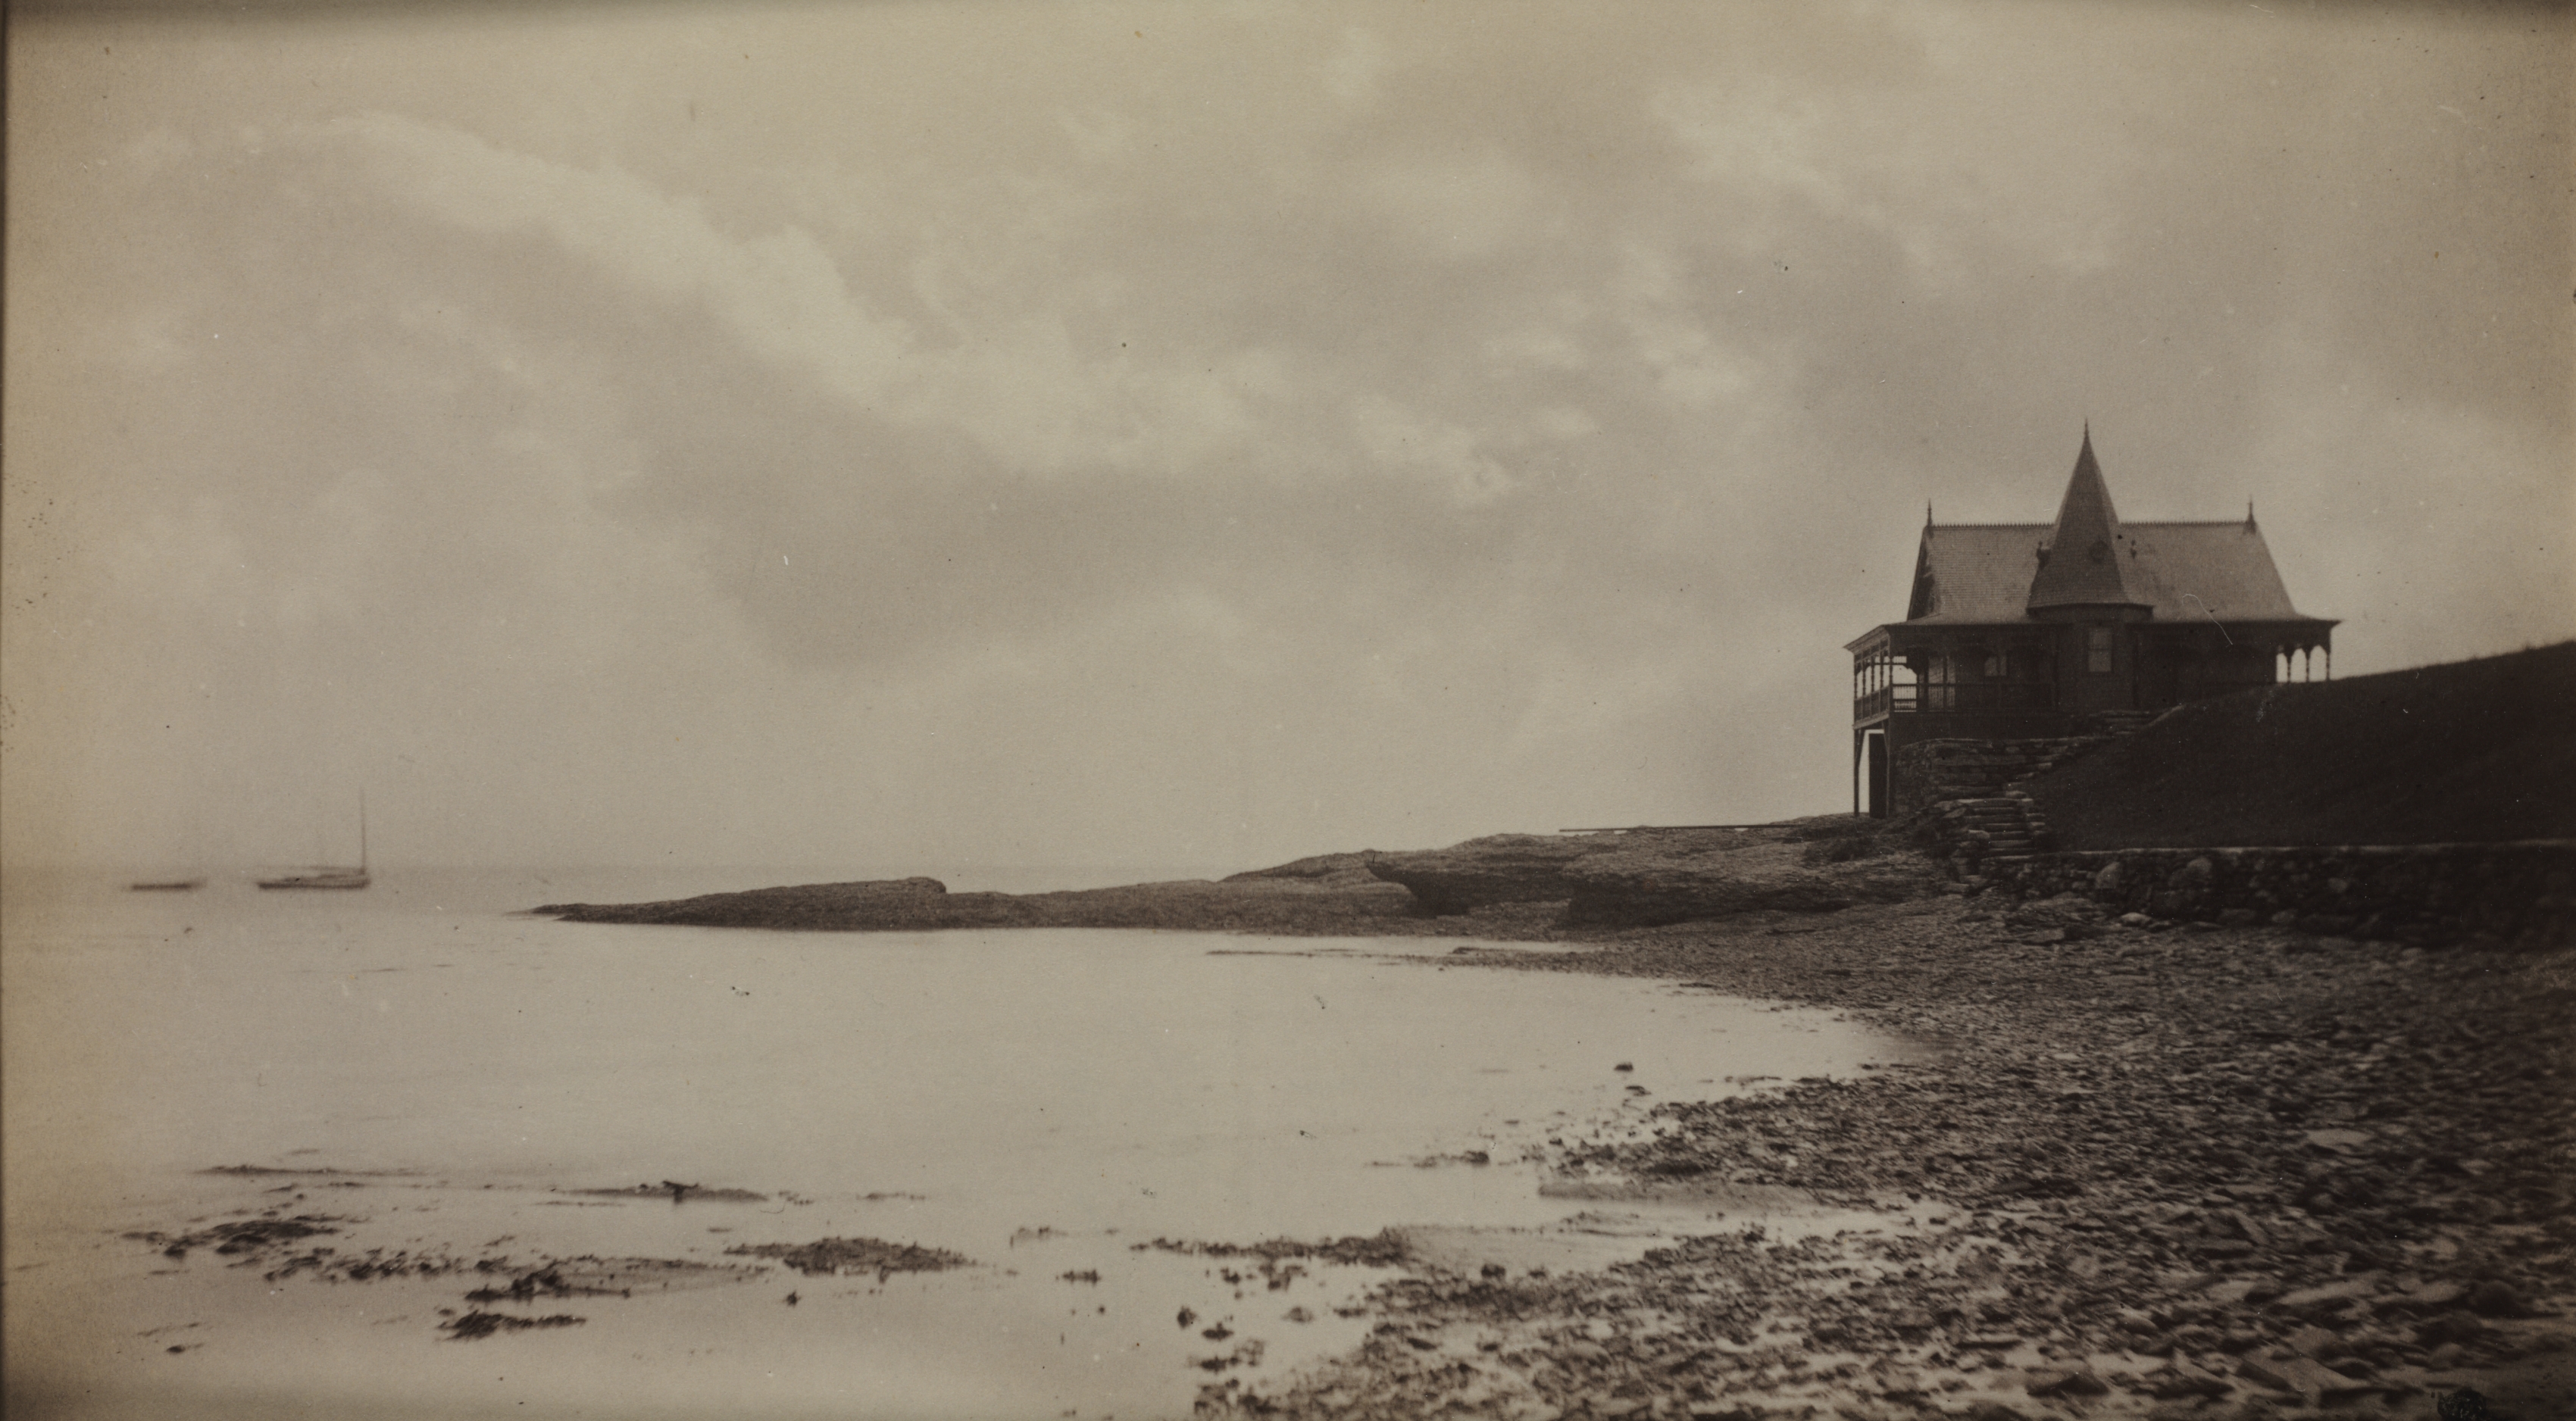 Edwin Booth's Boat House, Near Newport, August 6, 1884